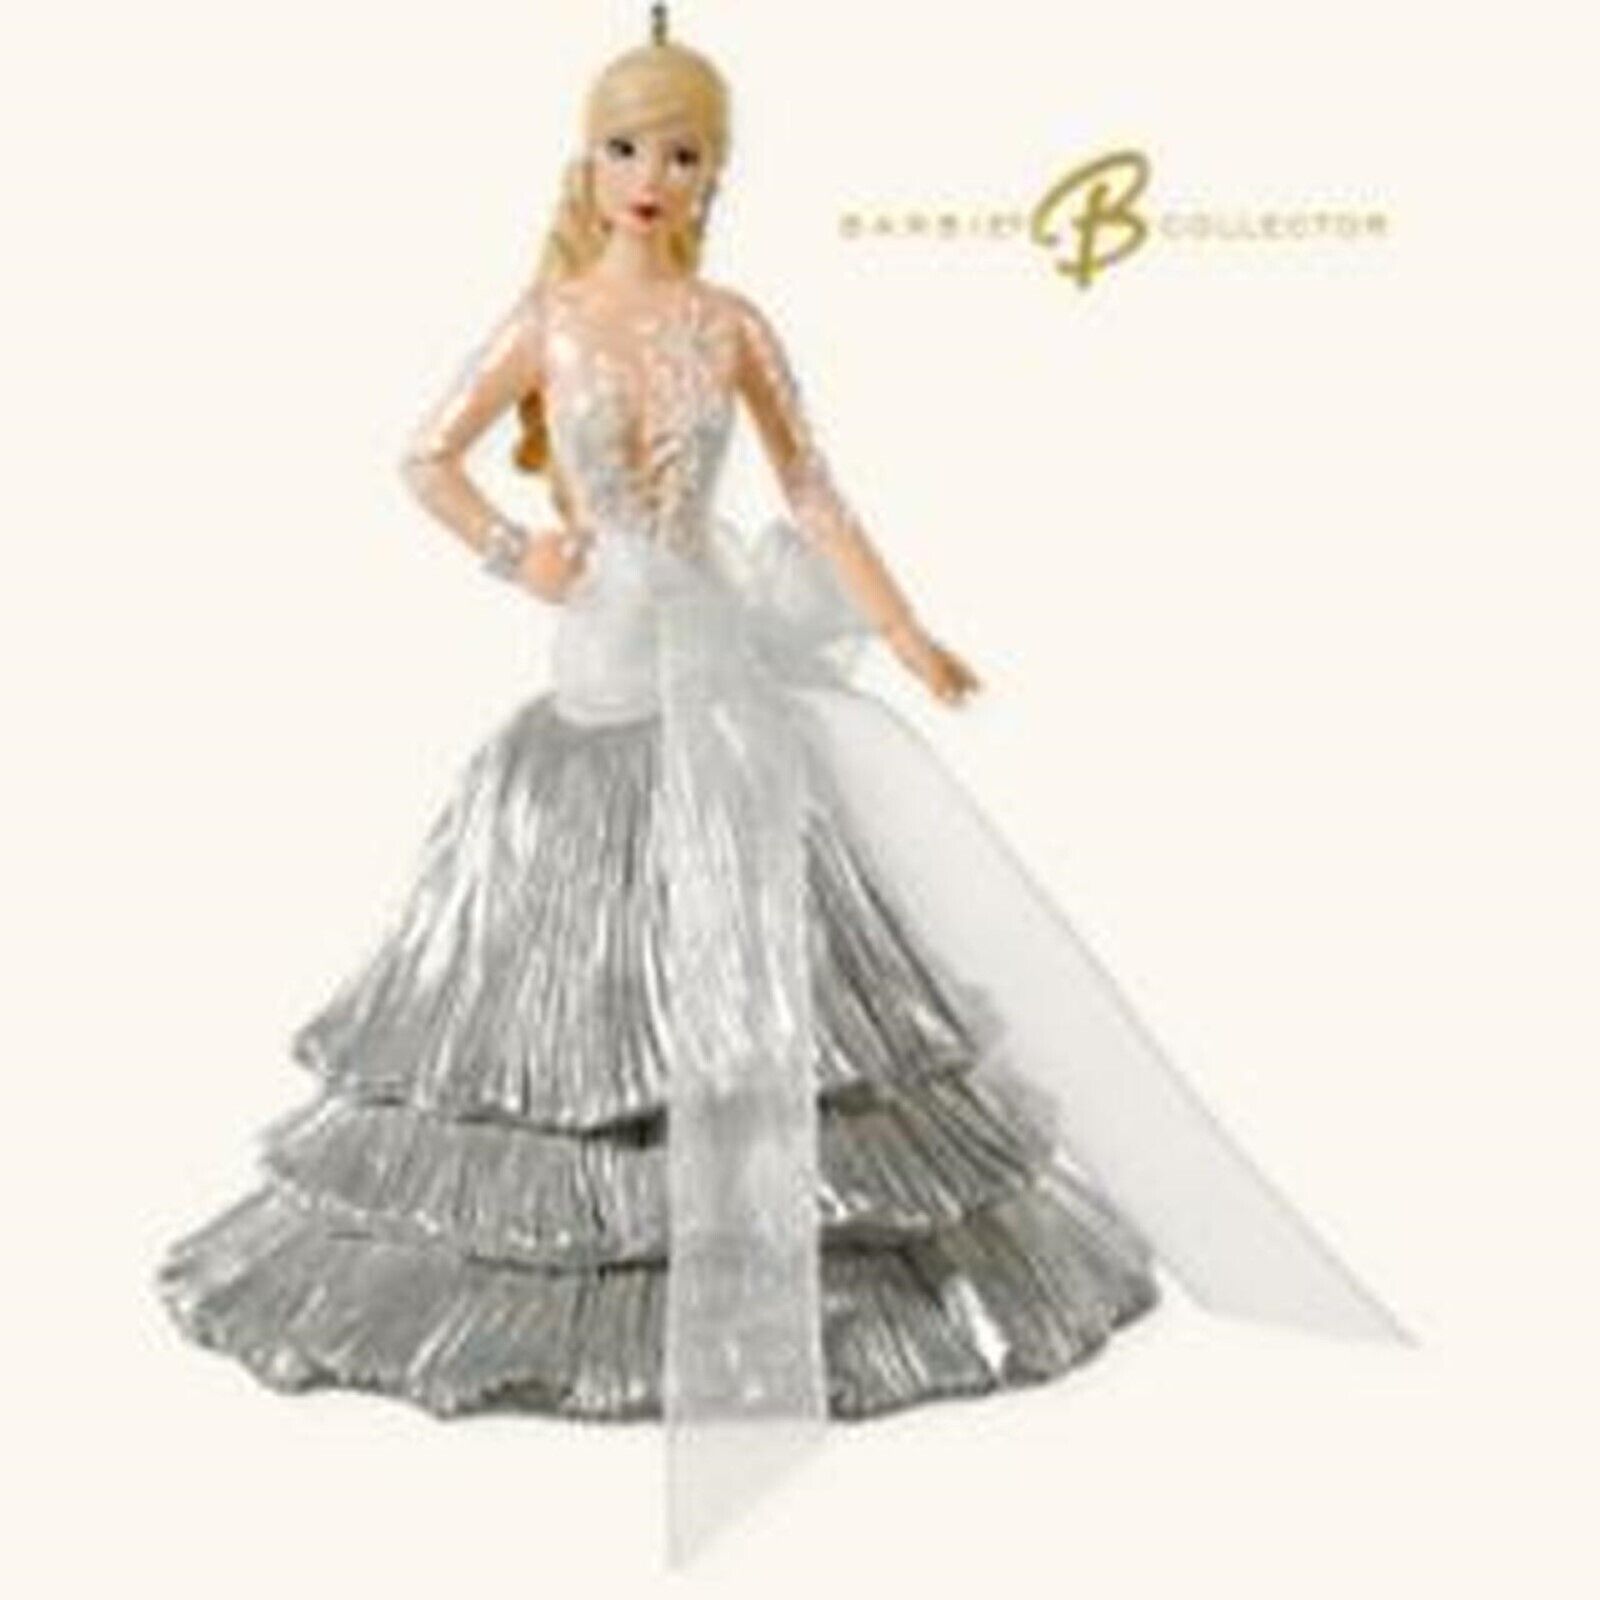 \'Special 2008 Edition\' \'Celebration Barbie Series\' Hallmark Ornament - NEW 